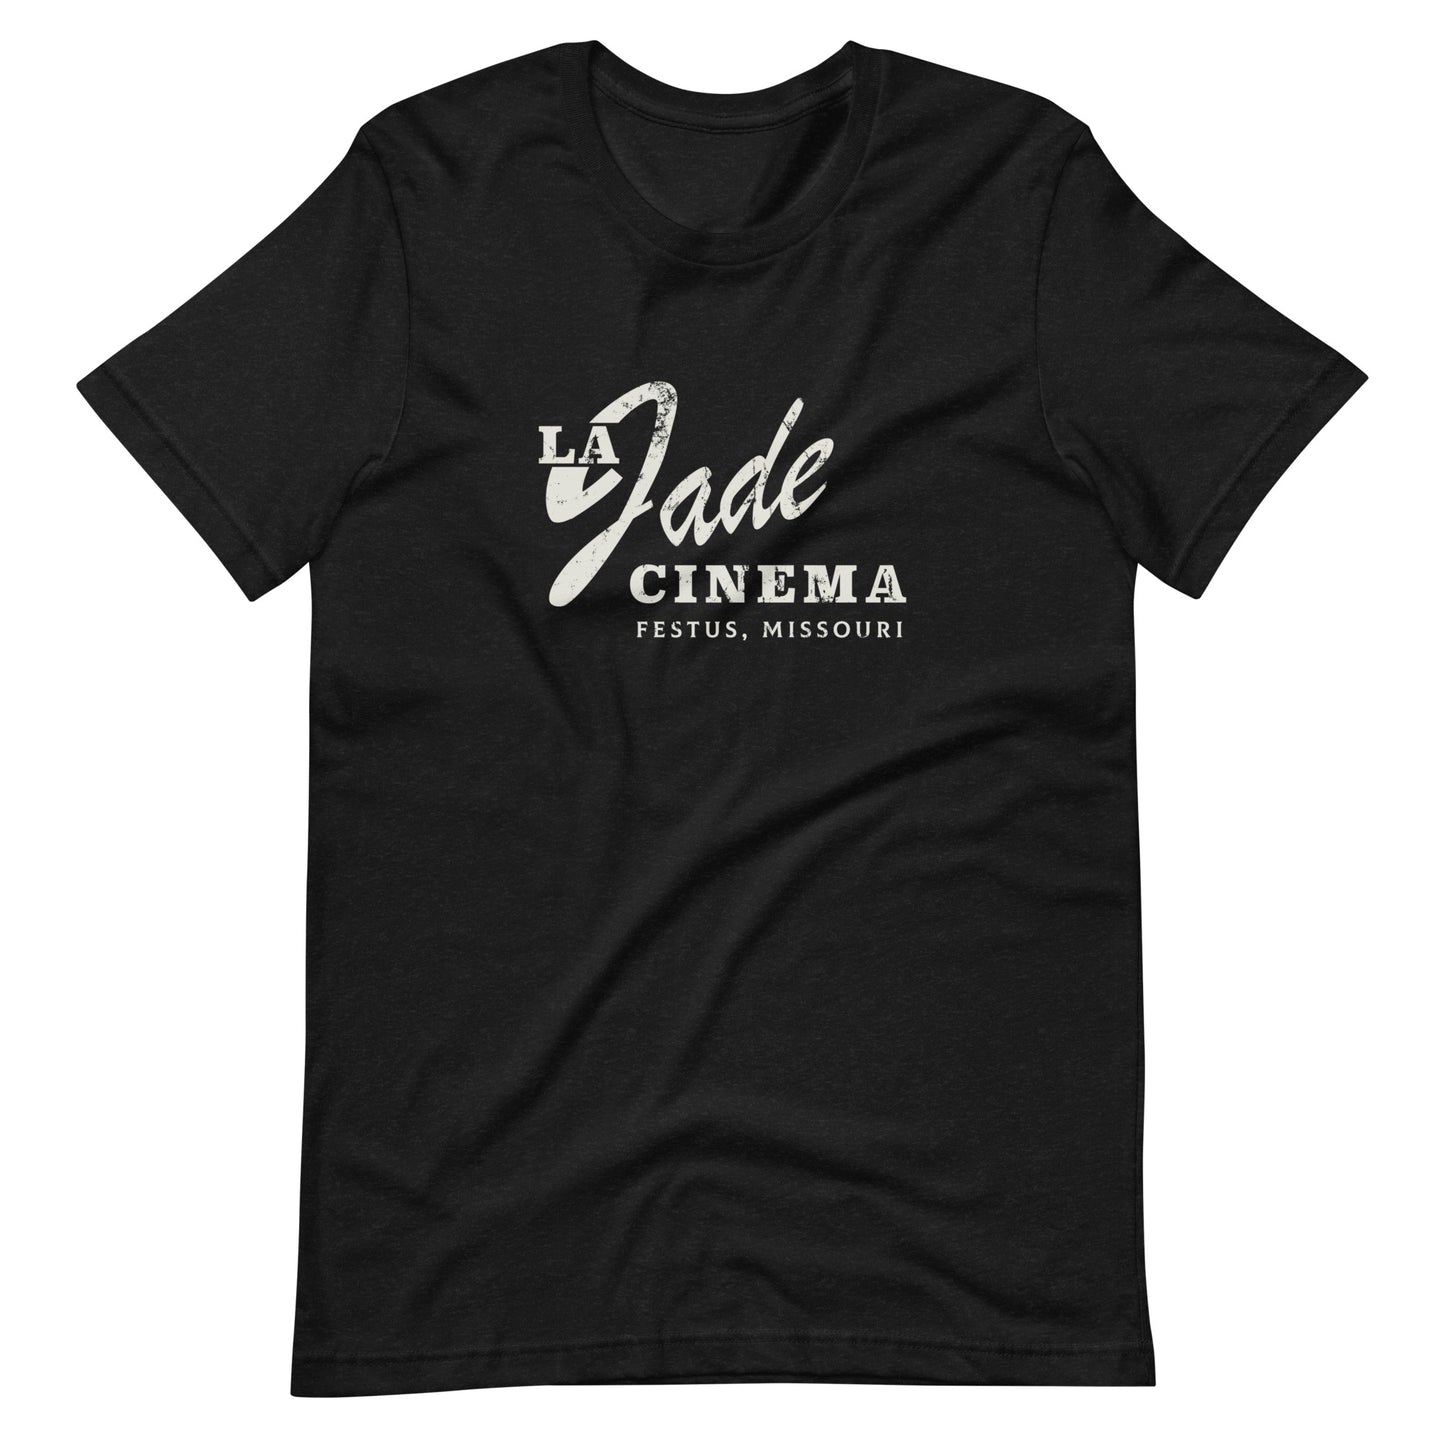 La Jade Cinema